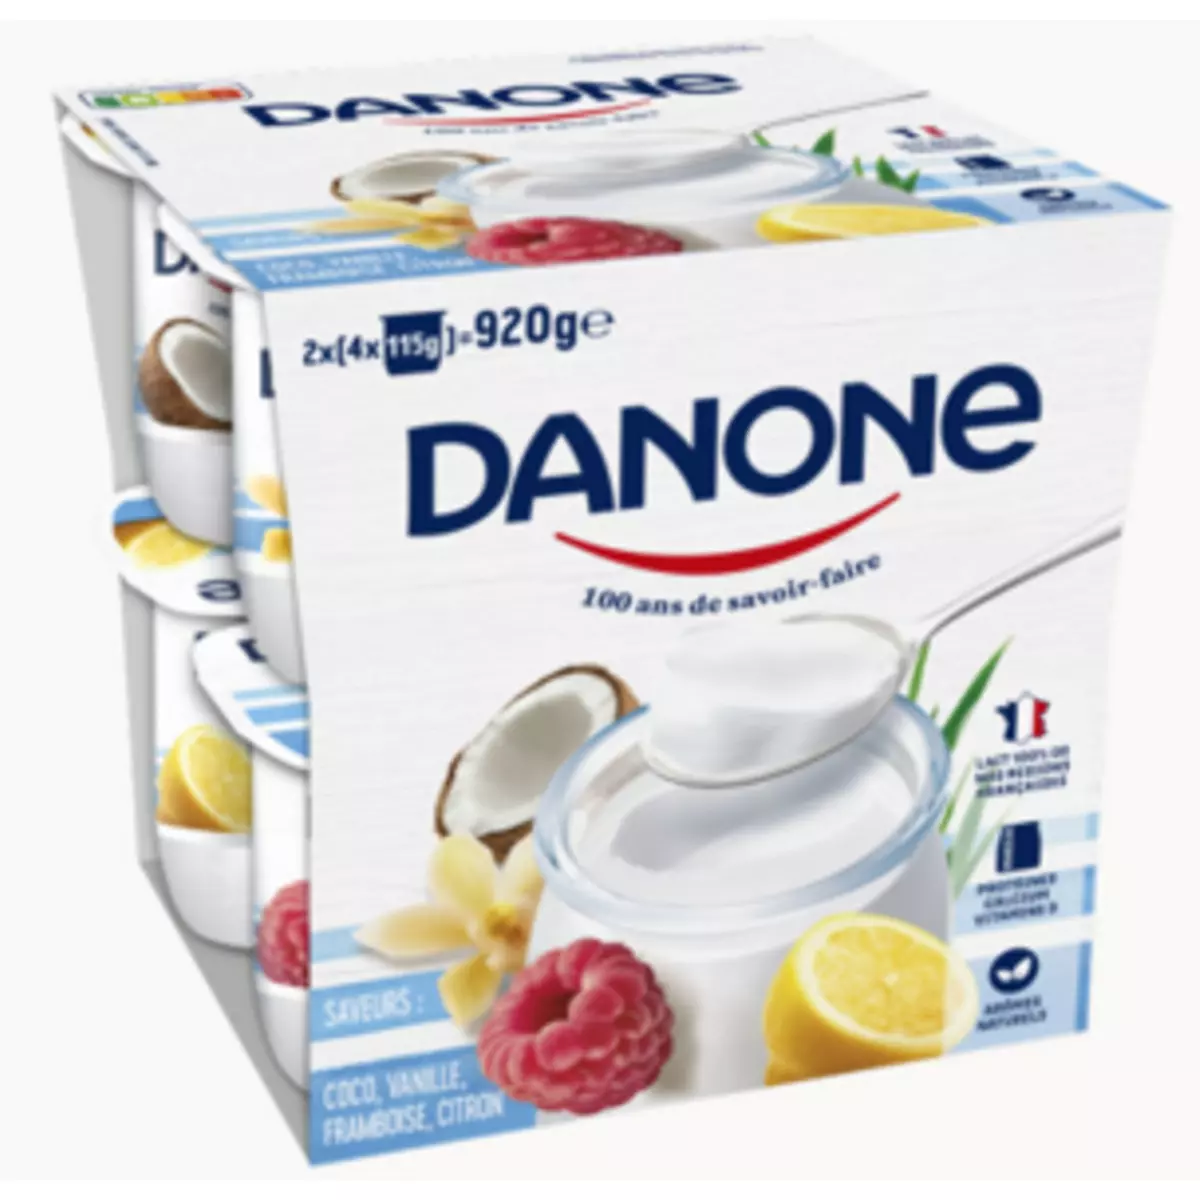 DANONE Yaourt saveurs coco vanille framboise citron 8x115g